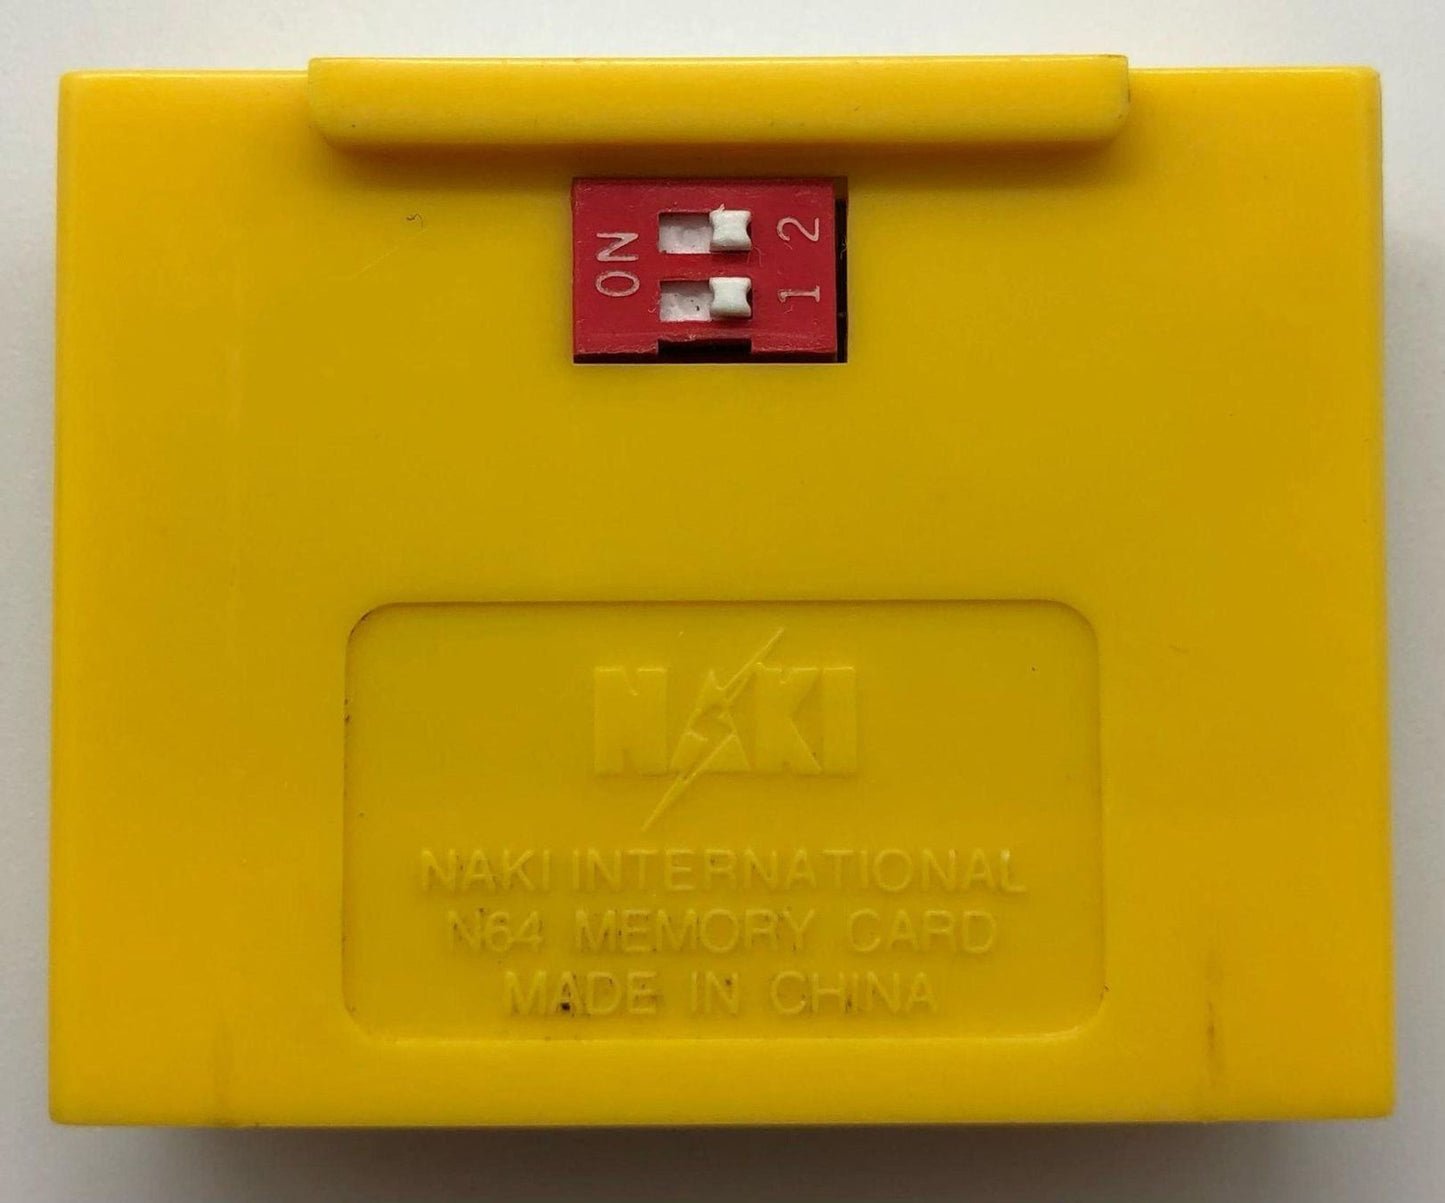 NAKI - Nintendo 64 Memory Card